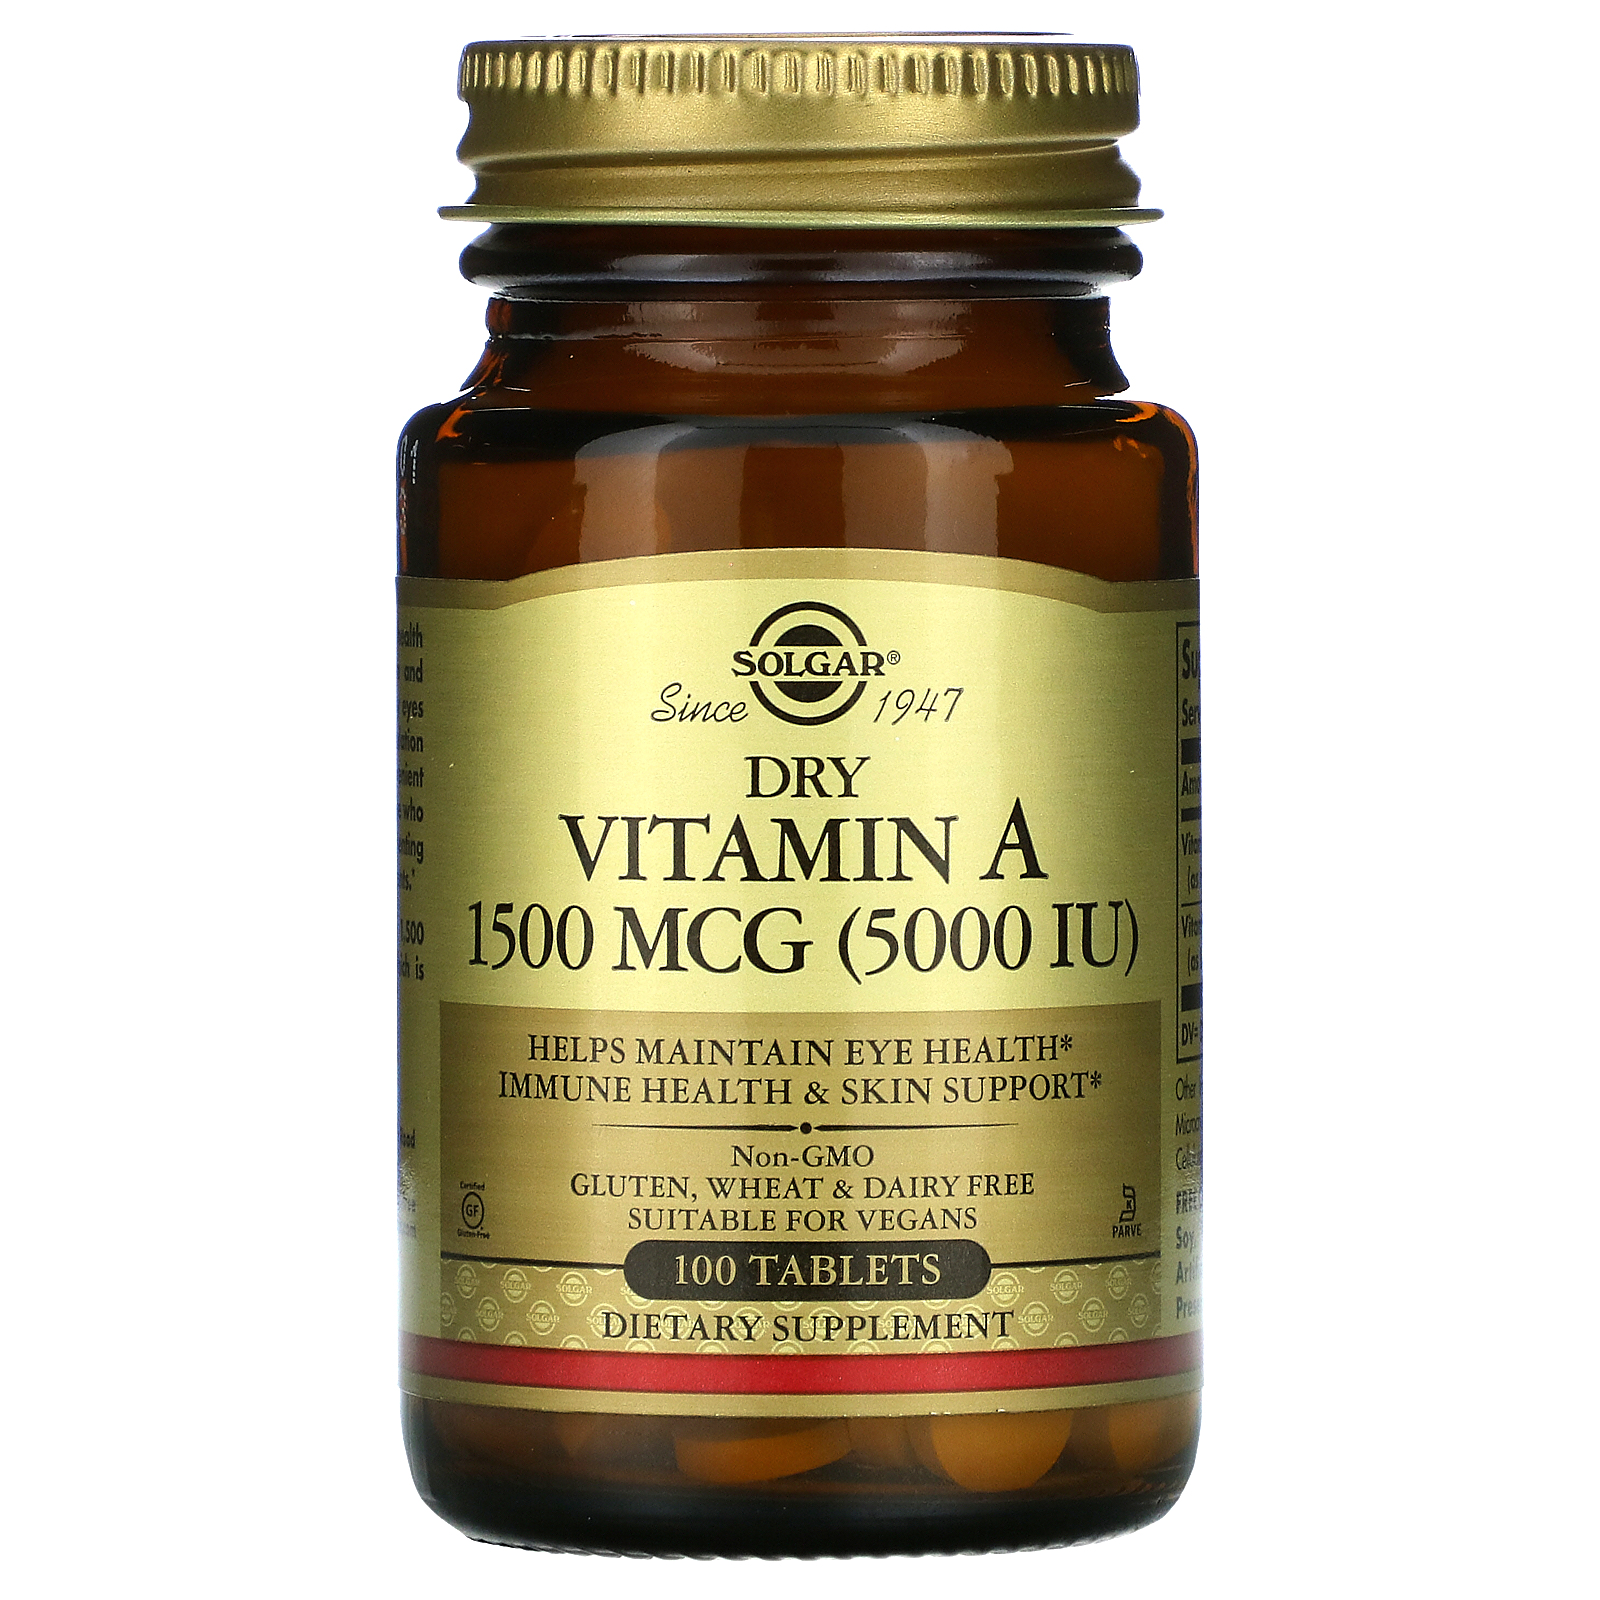 Dry Vitamin A, 1,500 mcg (5,000 IU), Tablets